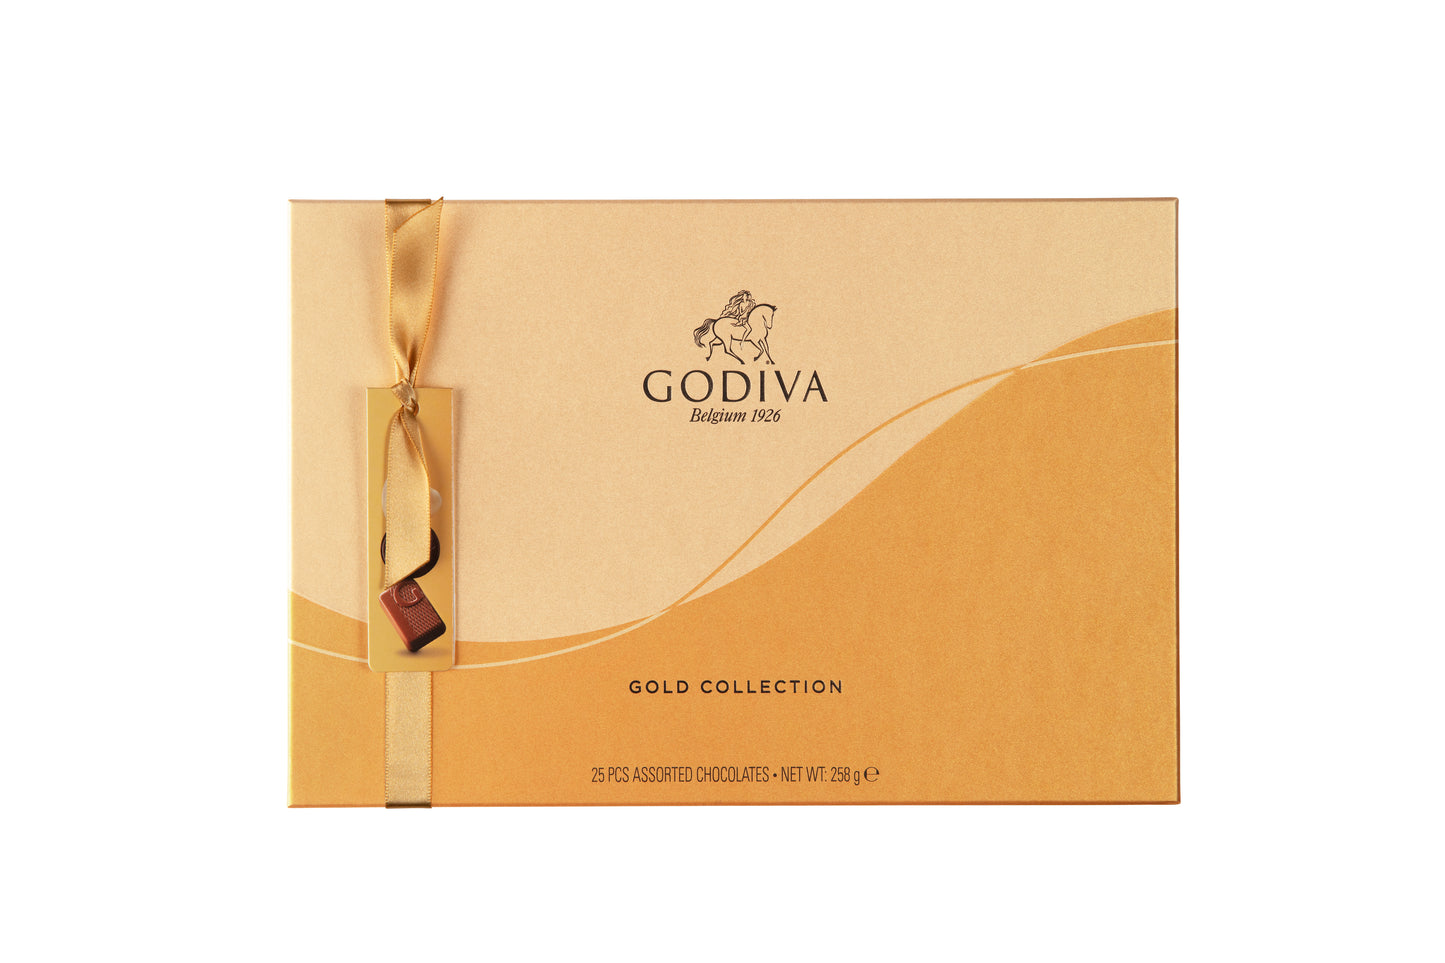 Godiva Gold collection